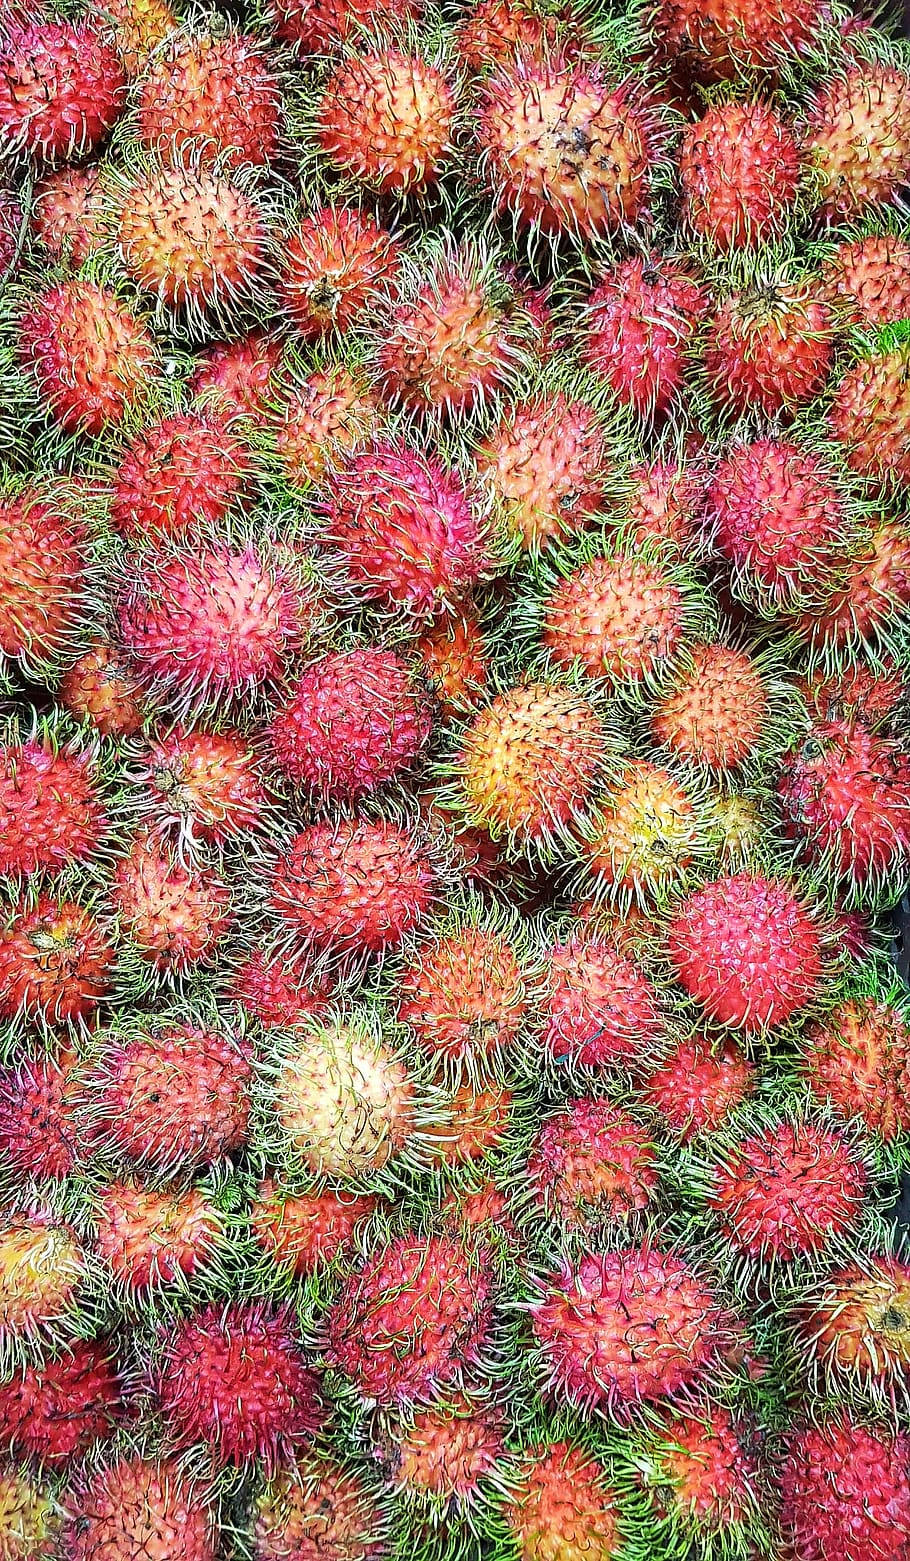 Furry Bright Red Rambutan Fruits Wallpaper